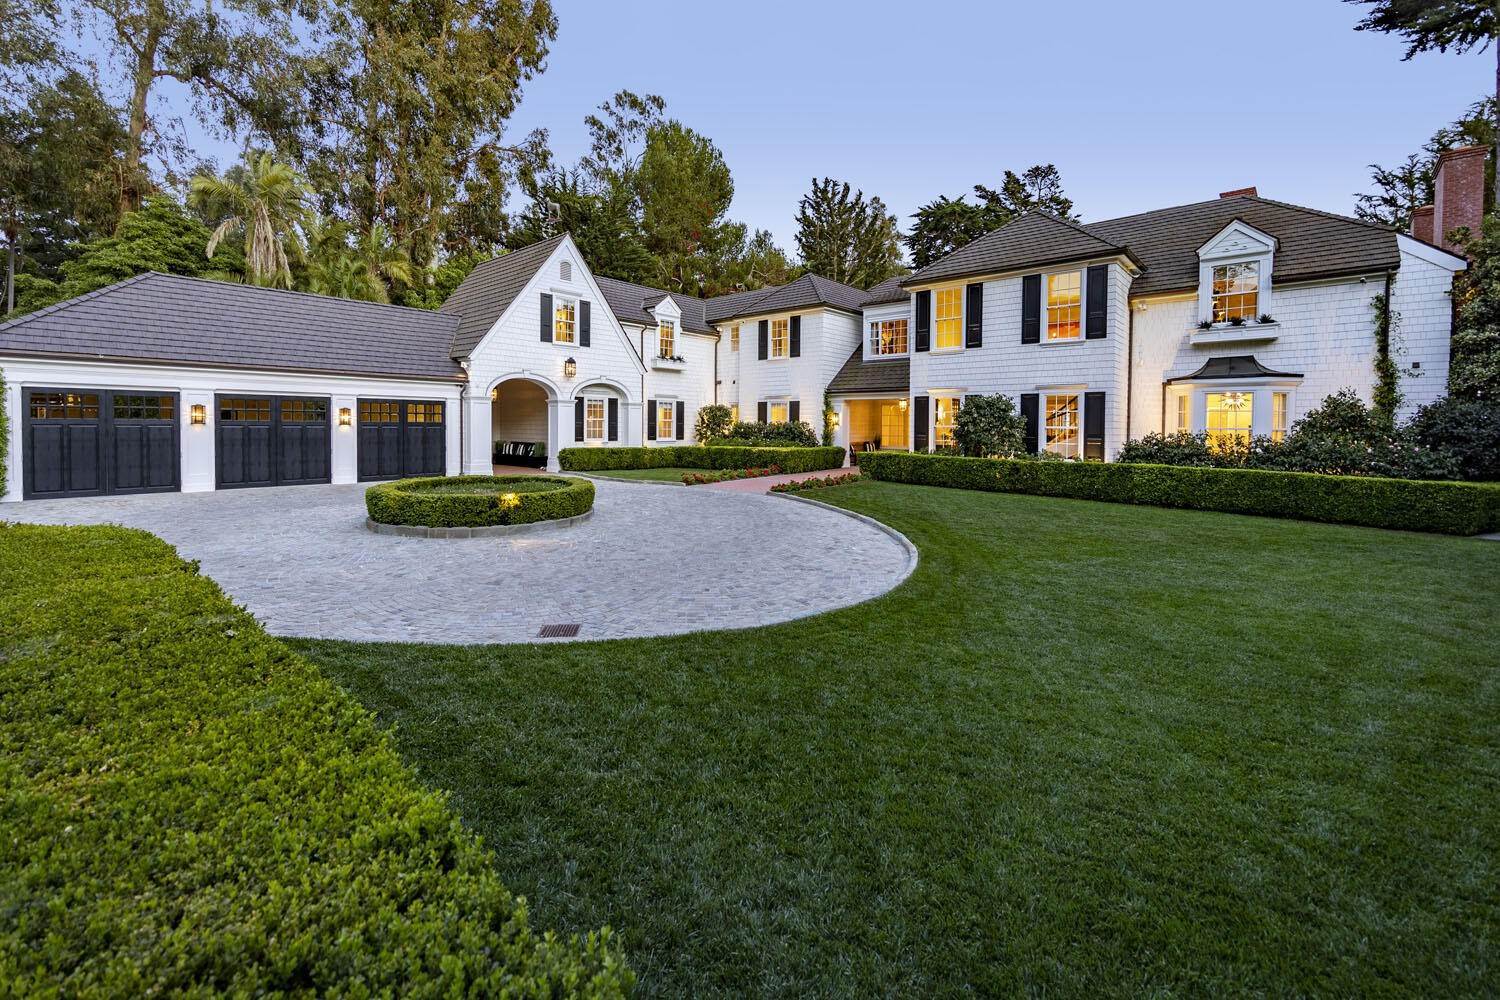 5. Estate for Sale at 3165 Padaro Lane Carpinteria, California 93013 United States